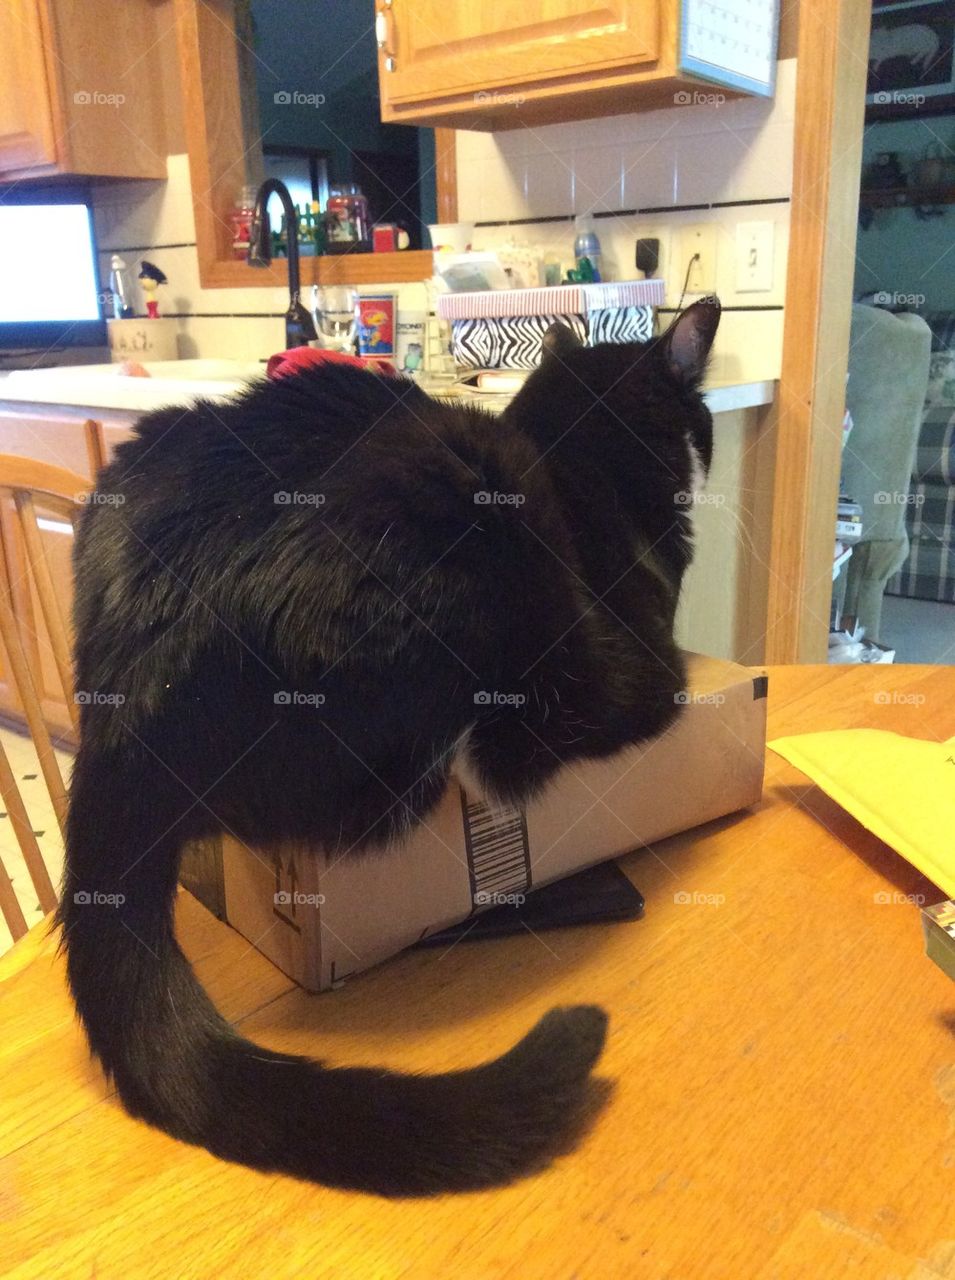 Riley on box